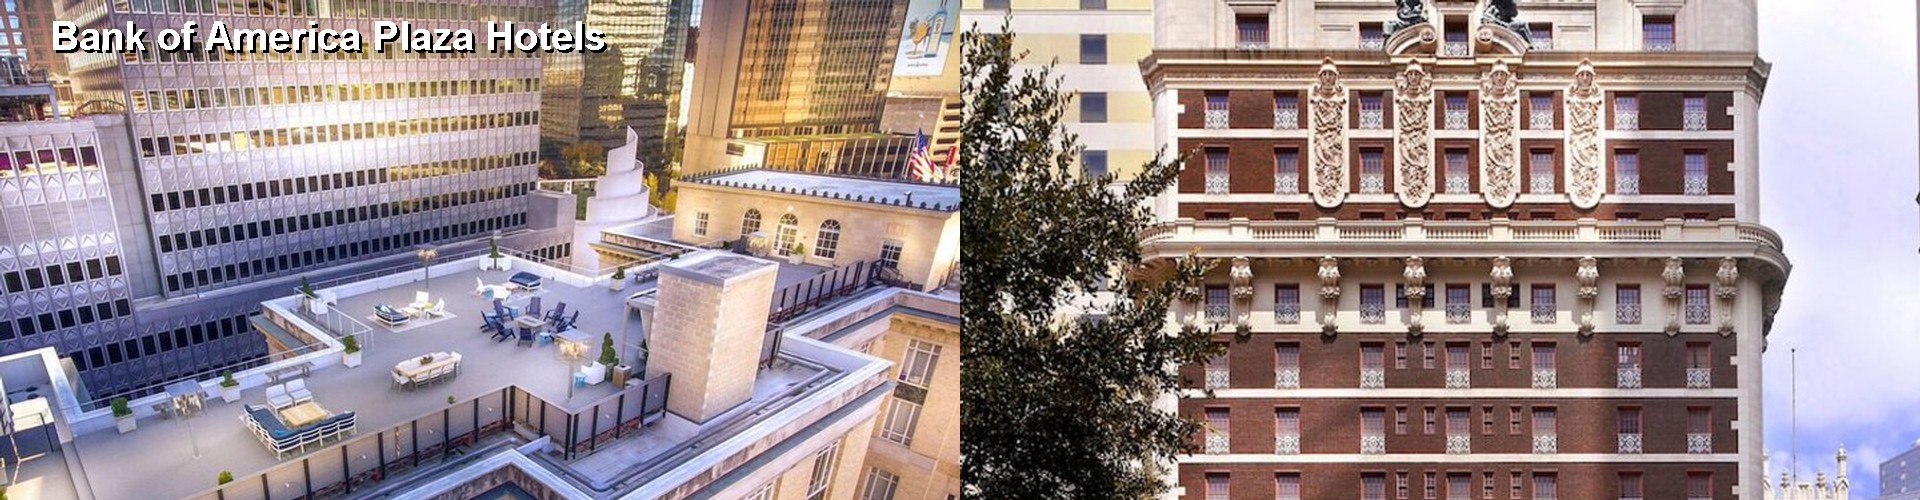 5 Best Hotels near Bank of America Plaza